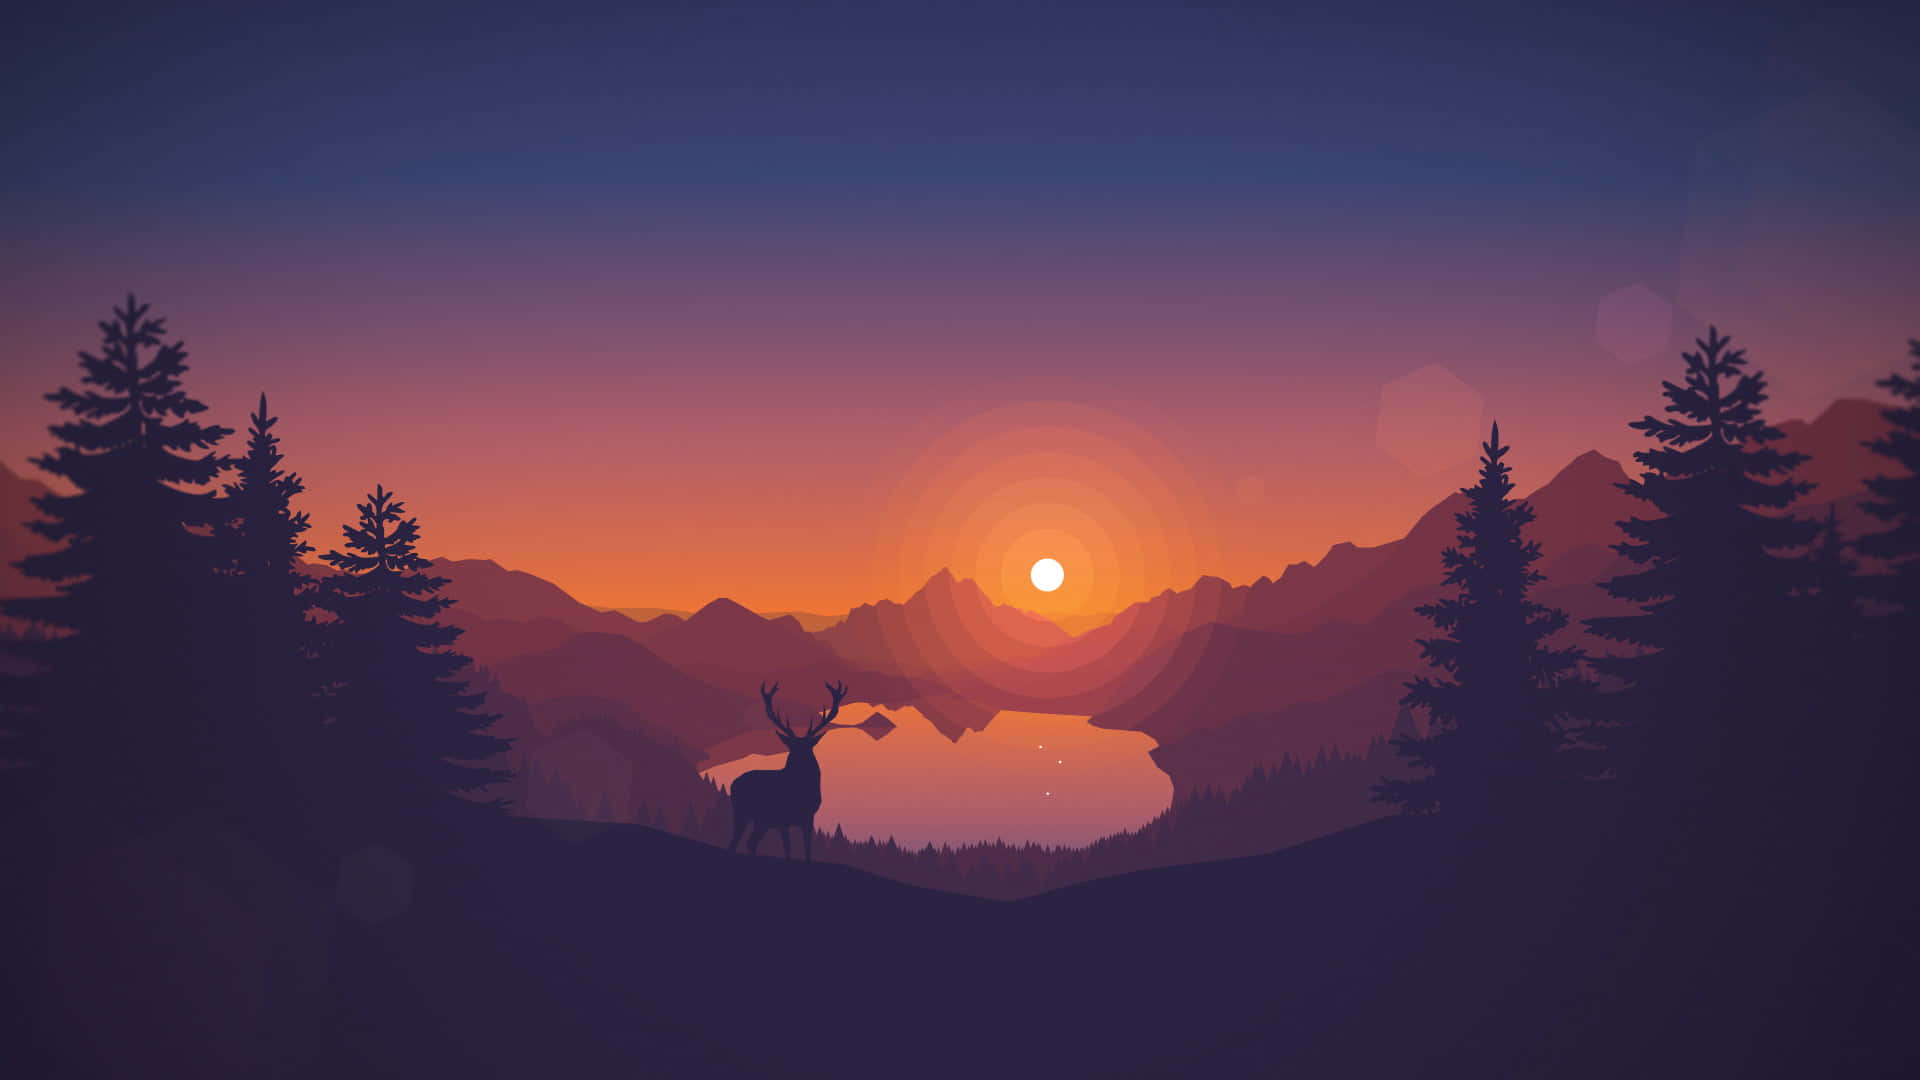 A Dramatic Mountain Sunset Wallpaper